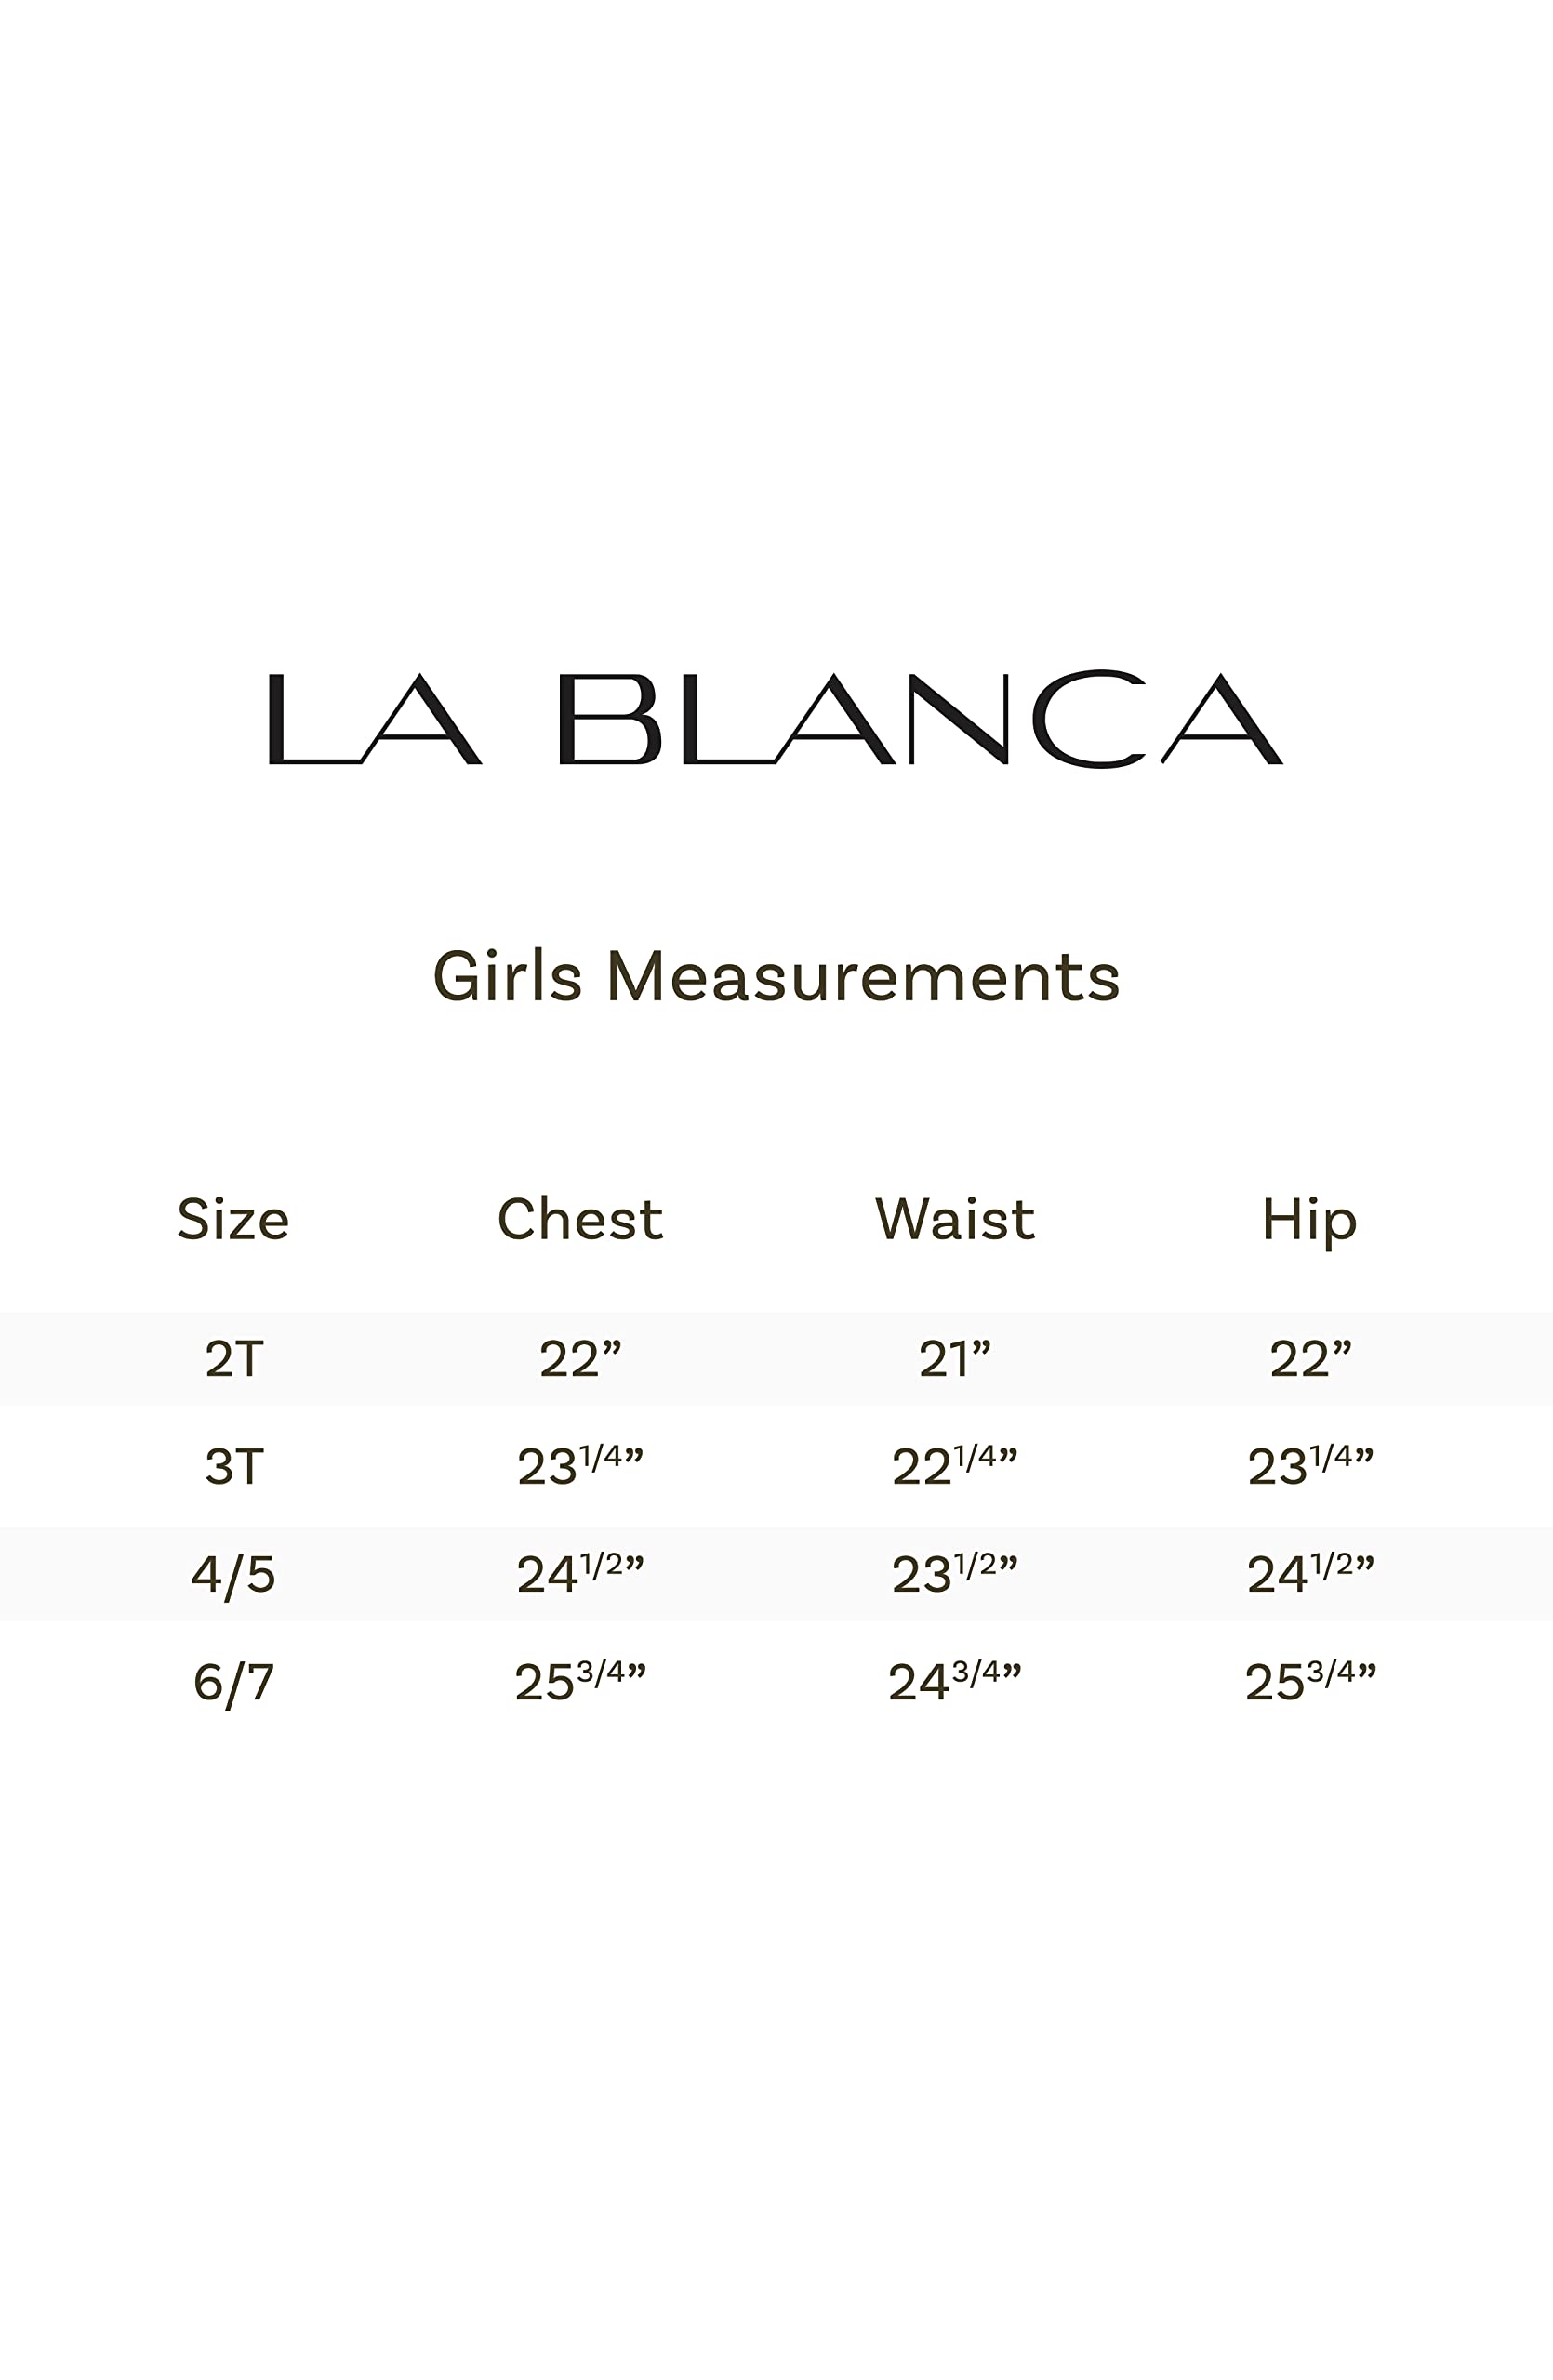 La Blanca Girls' Standard High Neck Top and Hipster Bottom Swimsuit Set